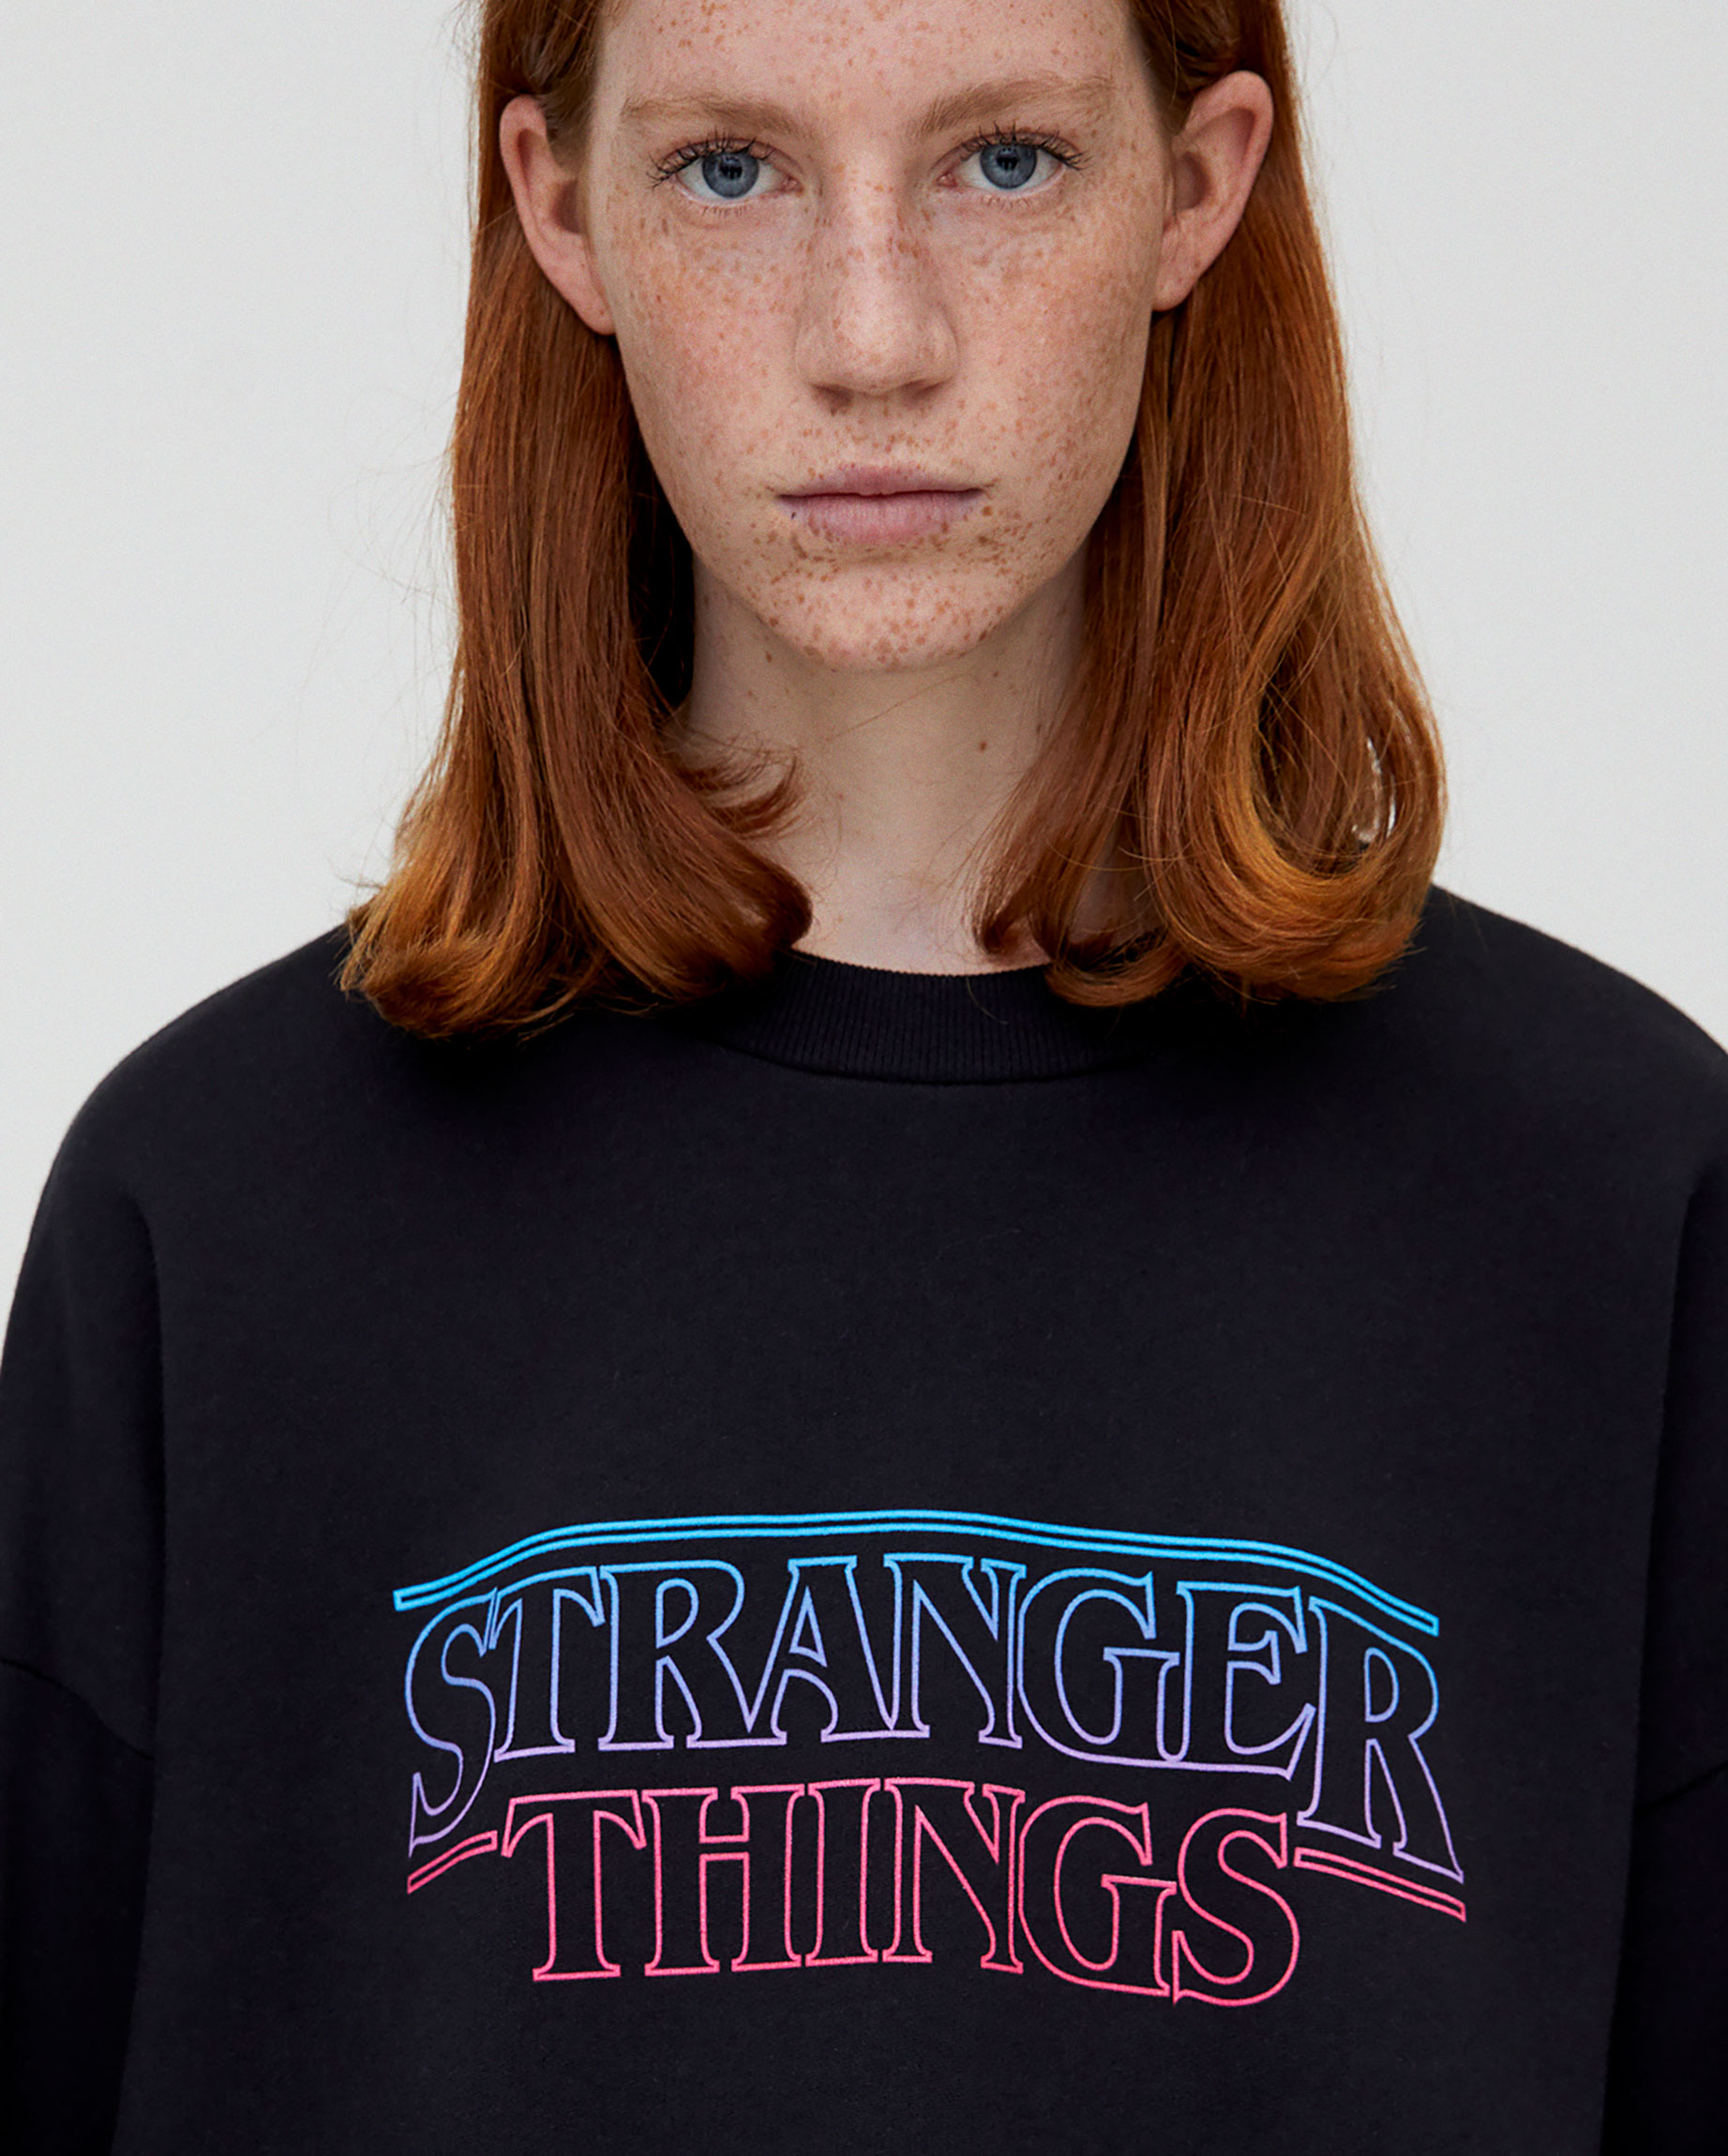 Go mad token translation Pull & Bear - Stranger Things 3 ombré sweatshirt